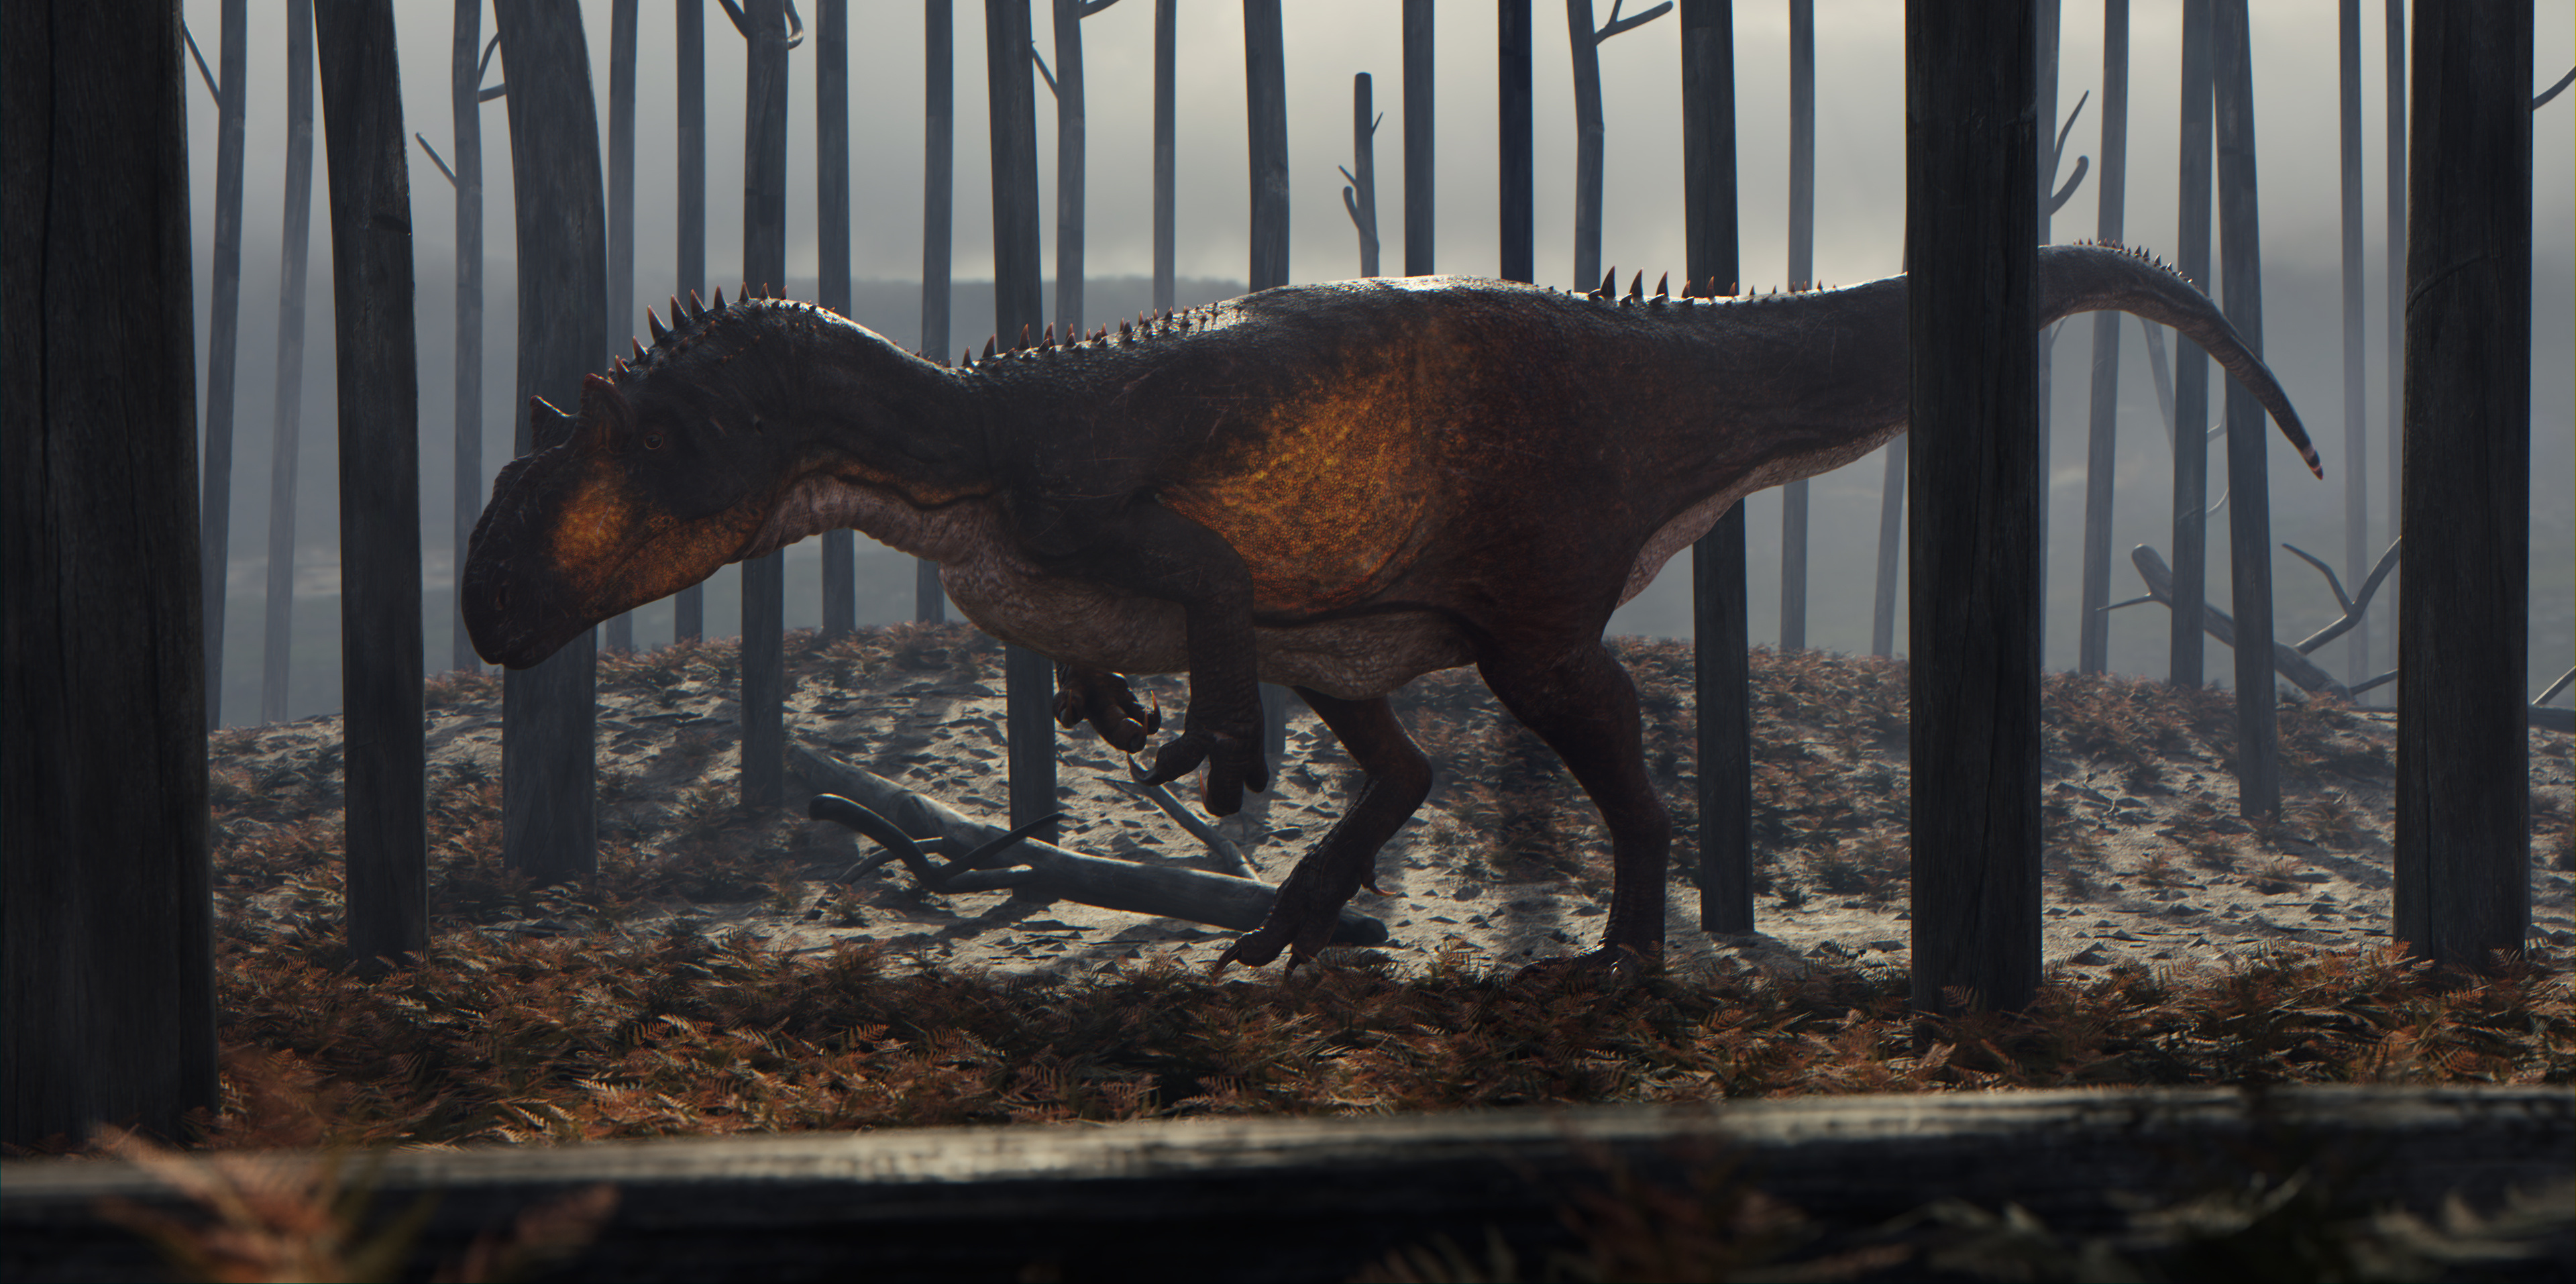 Allosaurus fragilis, Reconstruction finished projects, Blender artists community, Allosaurus, 3840x1920 Dual Screen Desktop